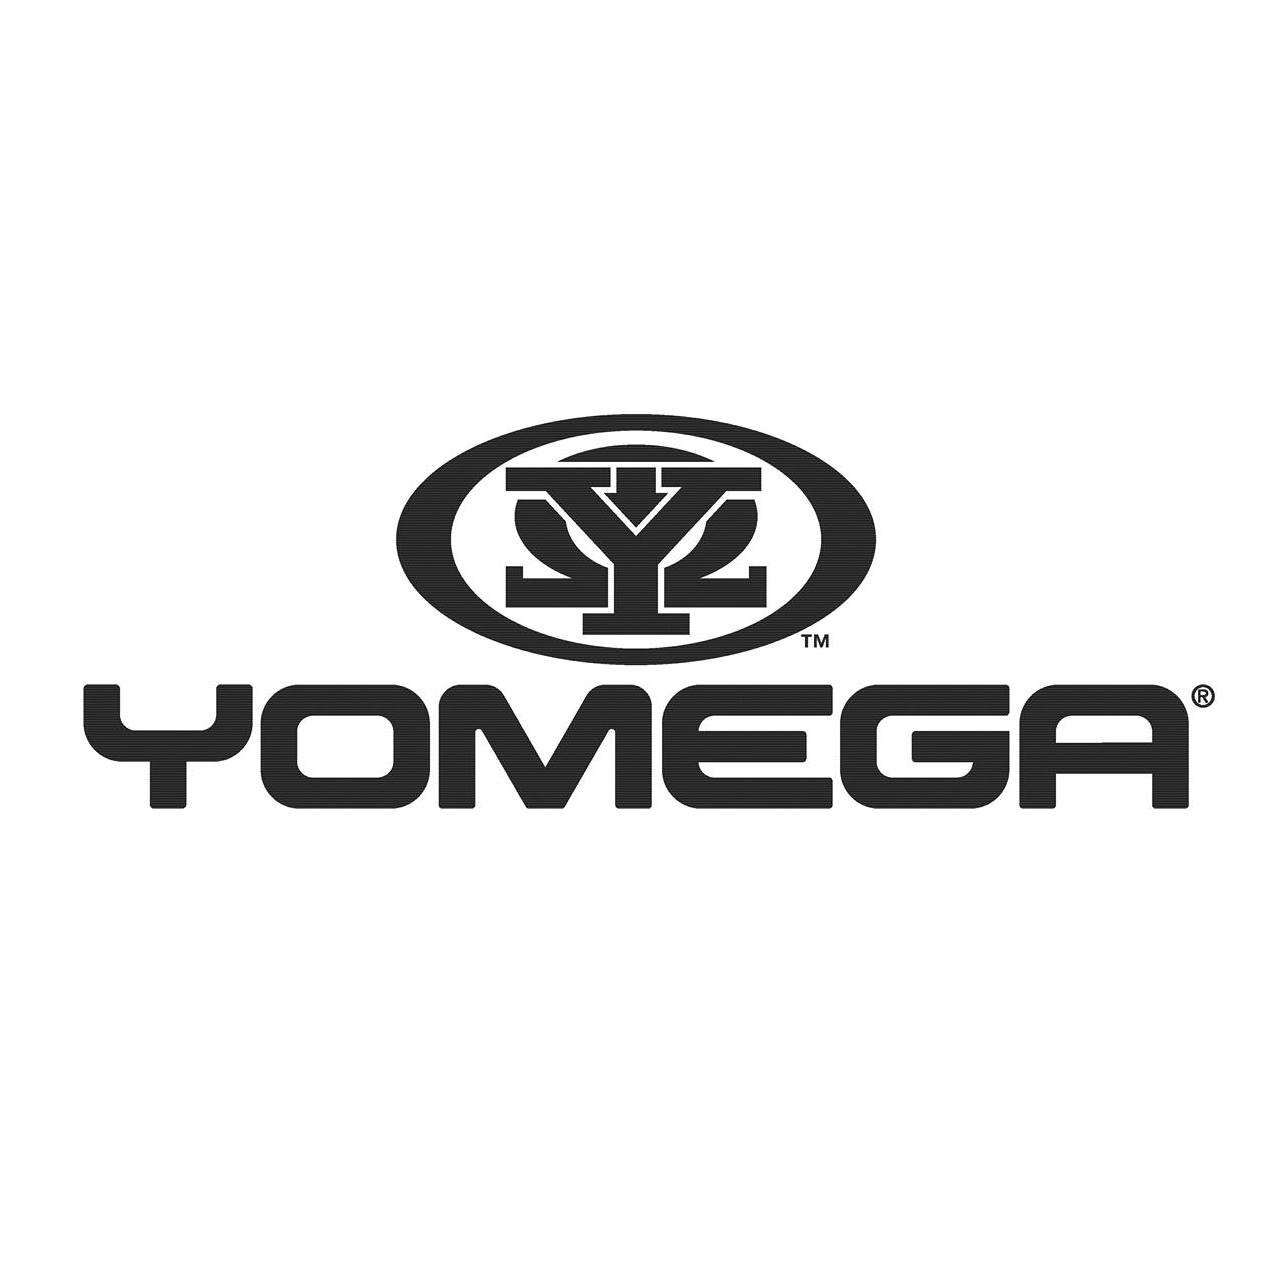 Yomega logo.jpg